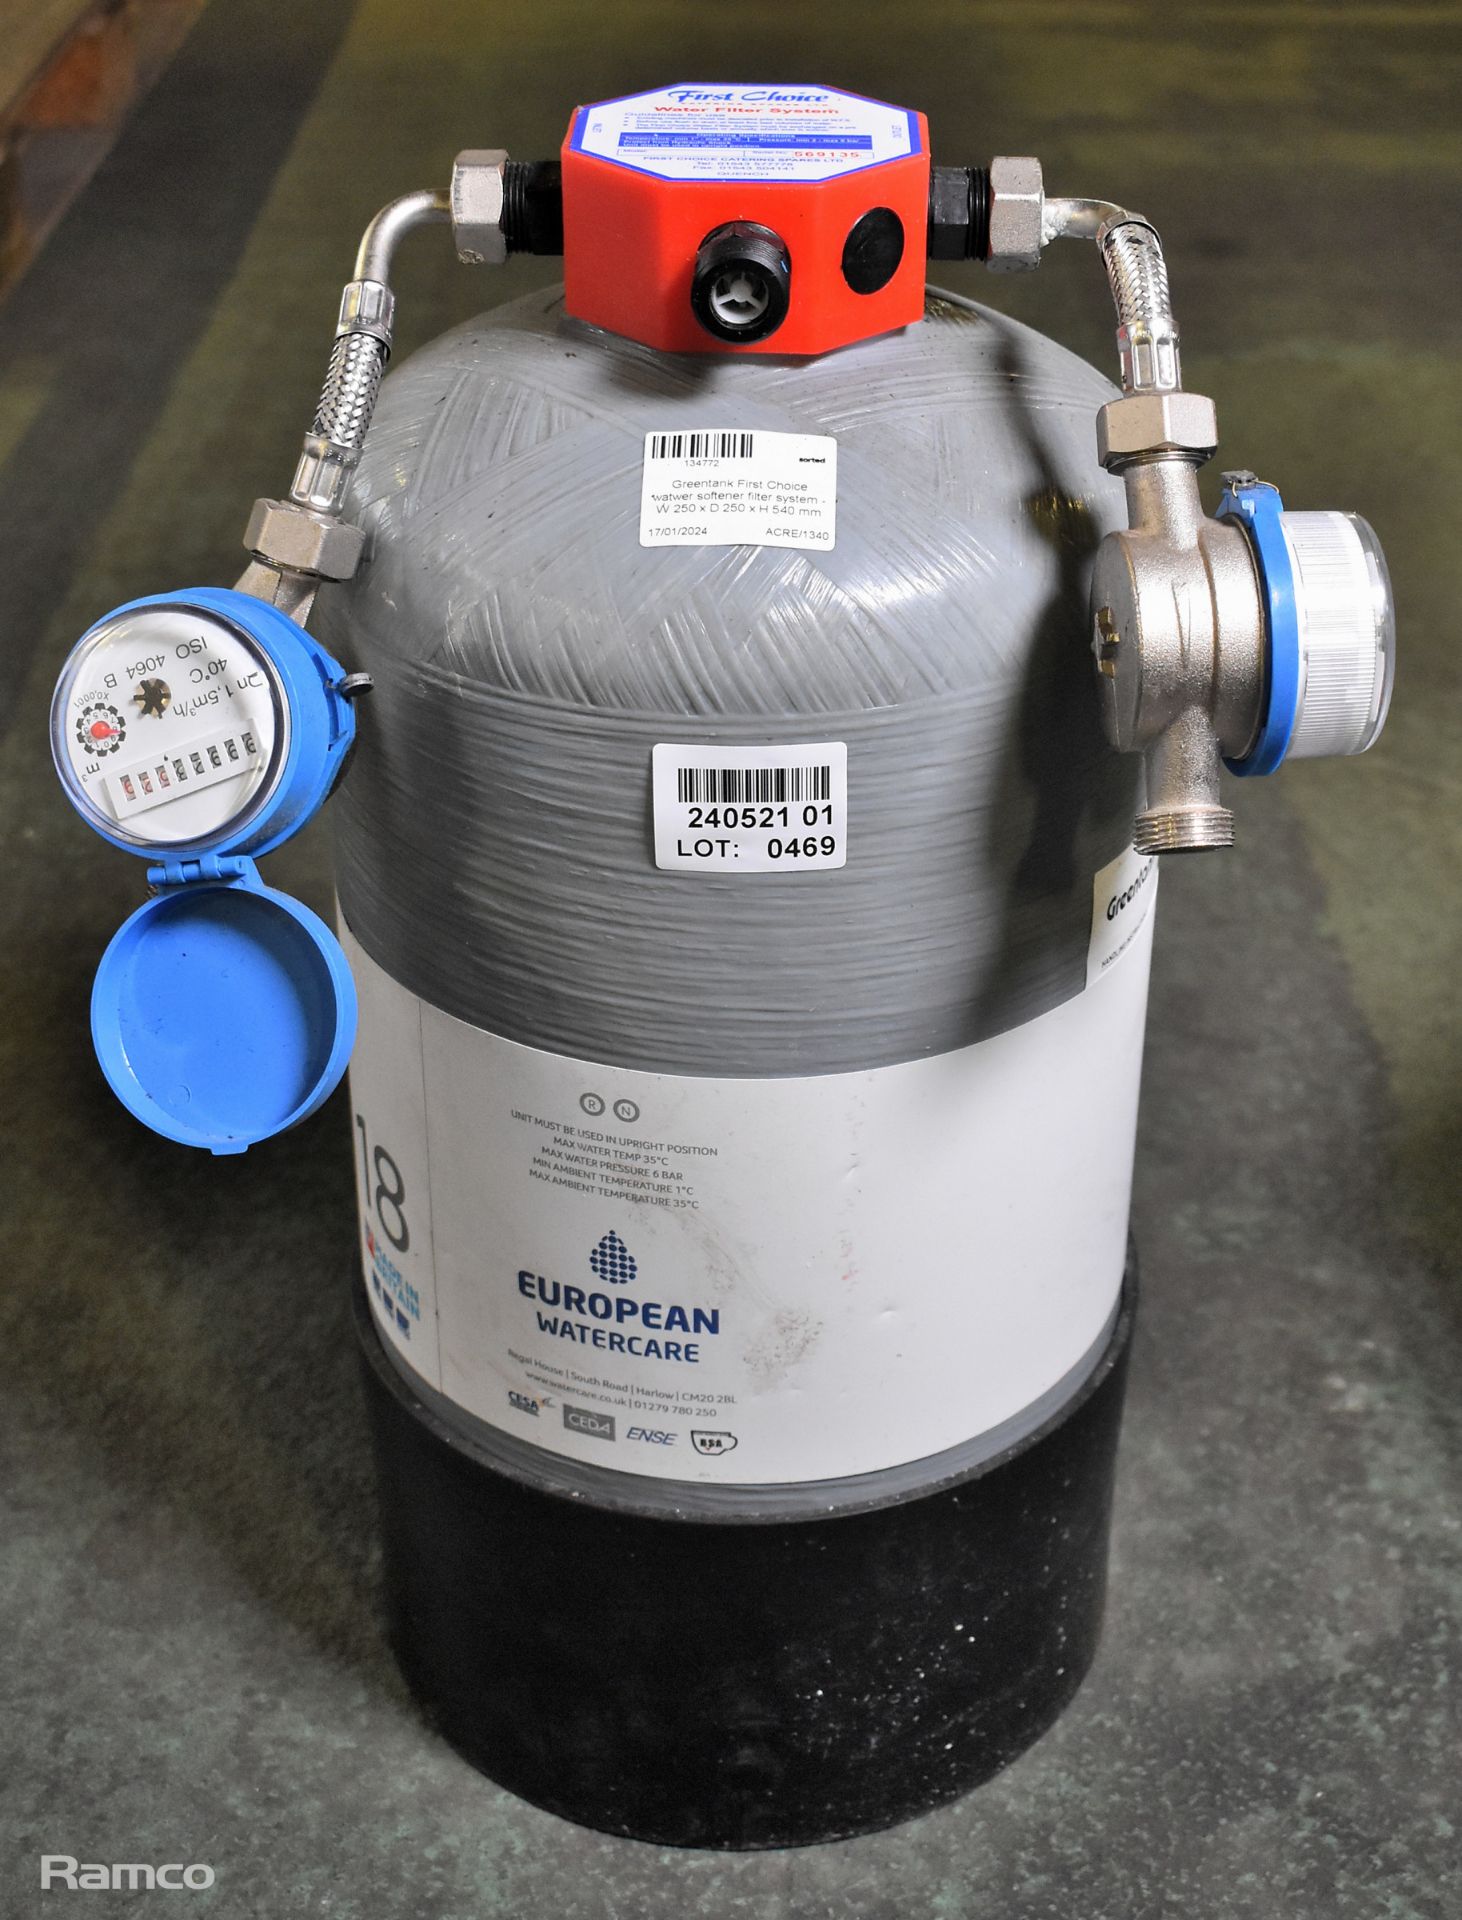 Greentank First Choice water softener filter system - W 250 x D 250 x H 540mm